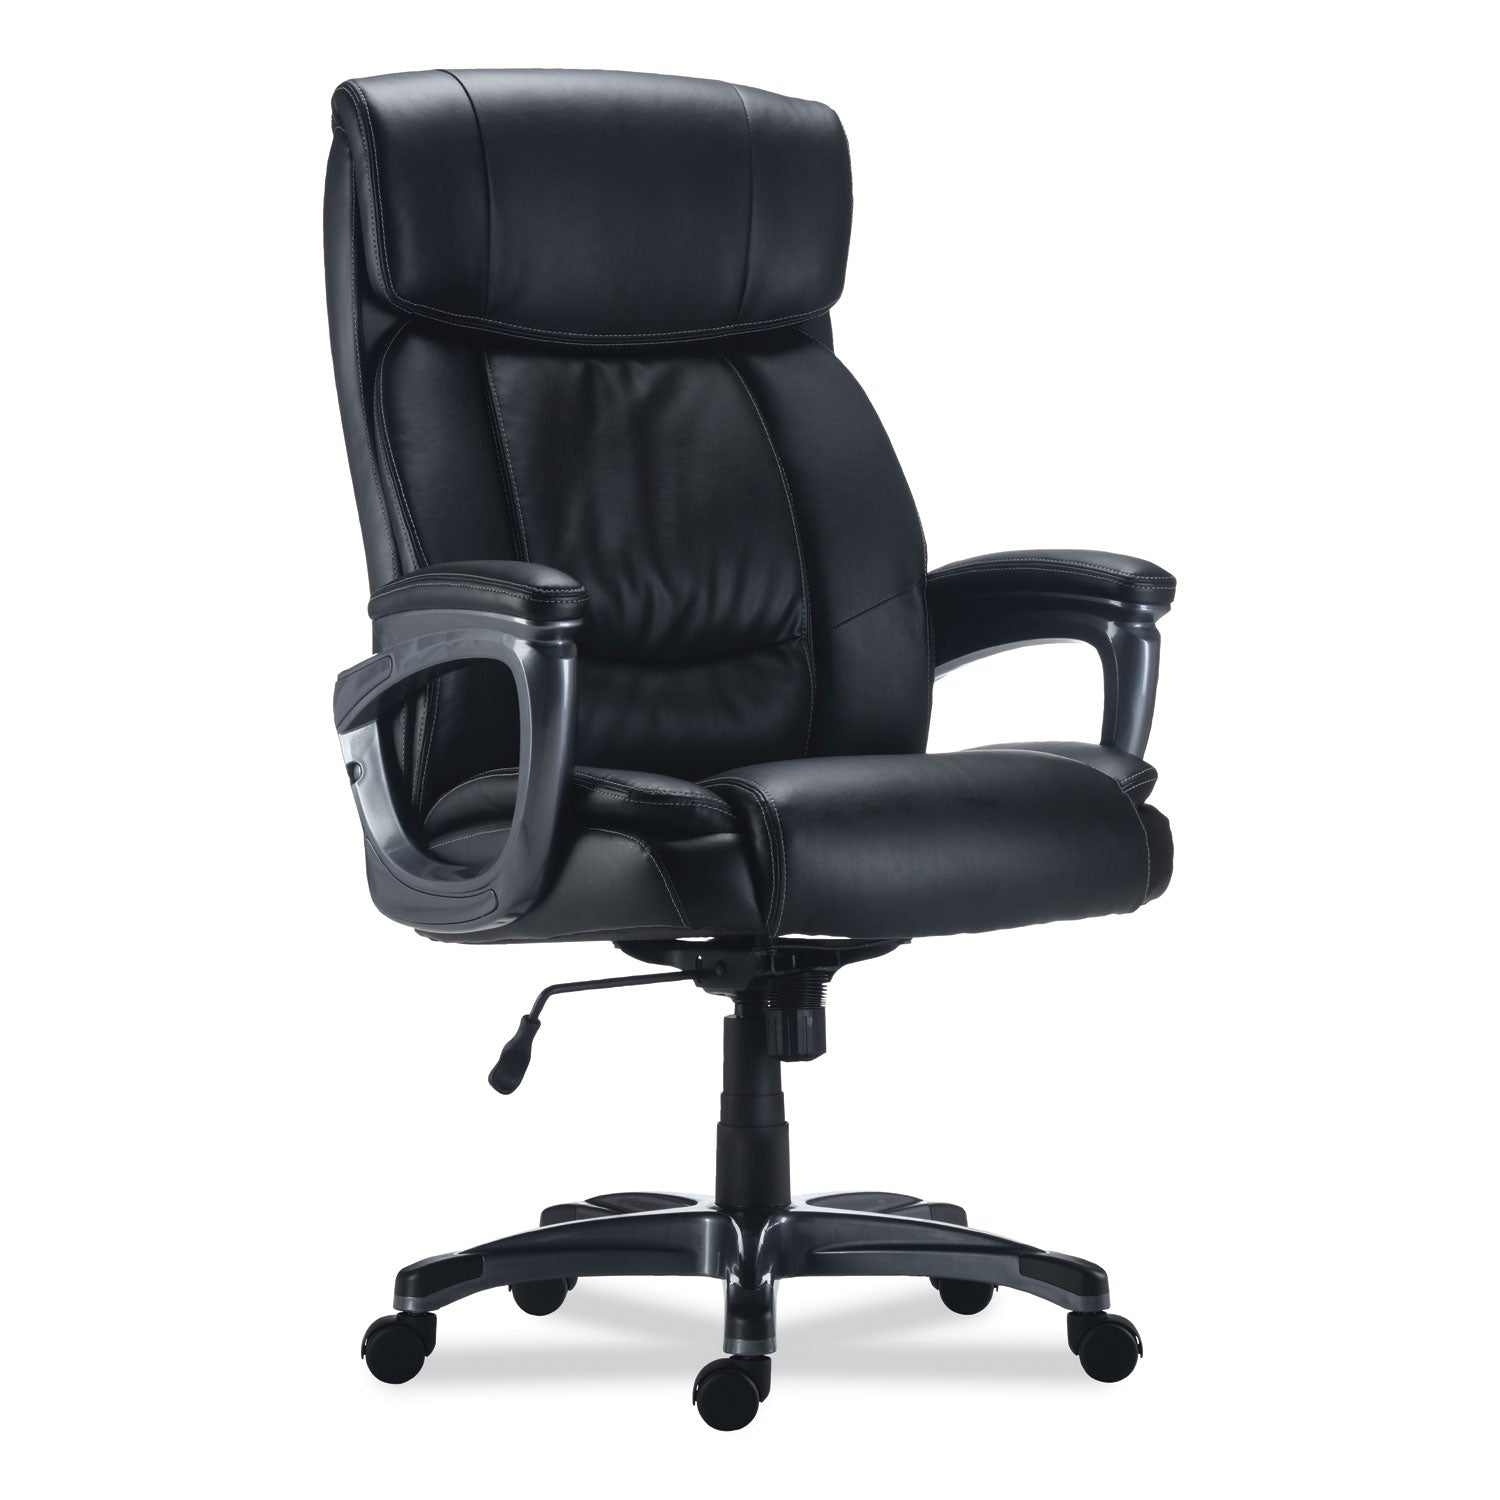 Alera Egino Big and Tall Chair, Supports Up to 400 lb, Black Seat/Back, Black Base - 1